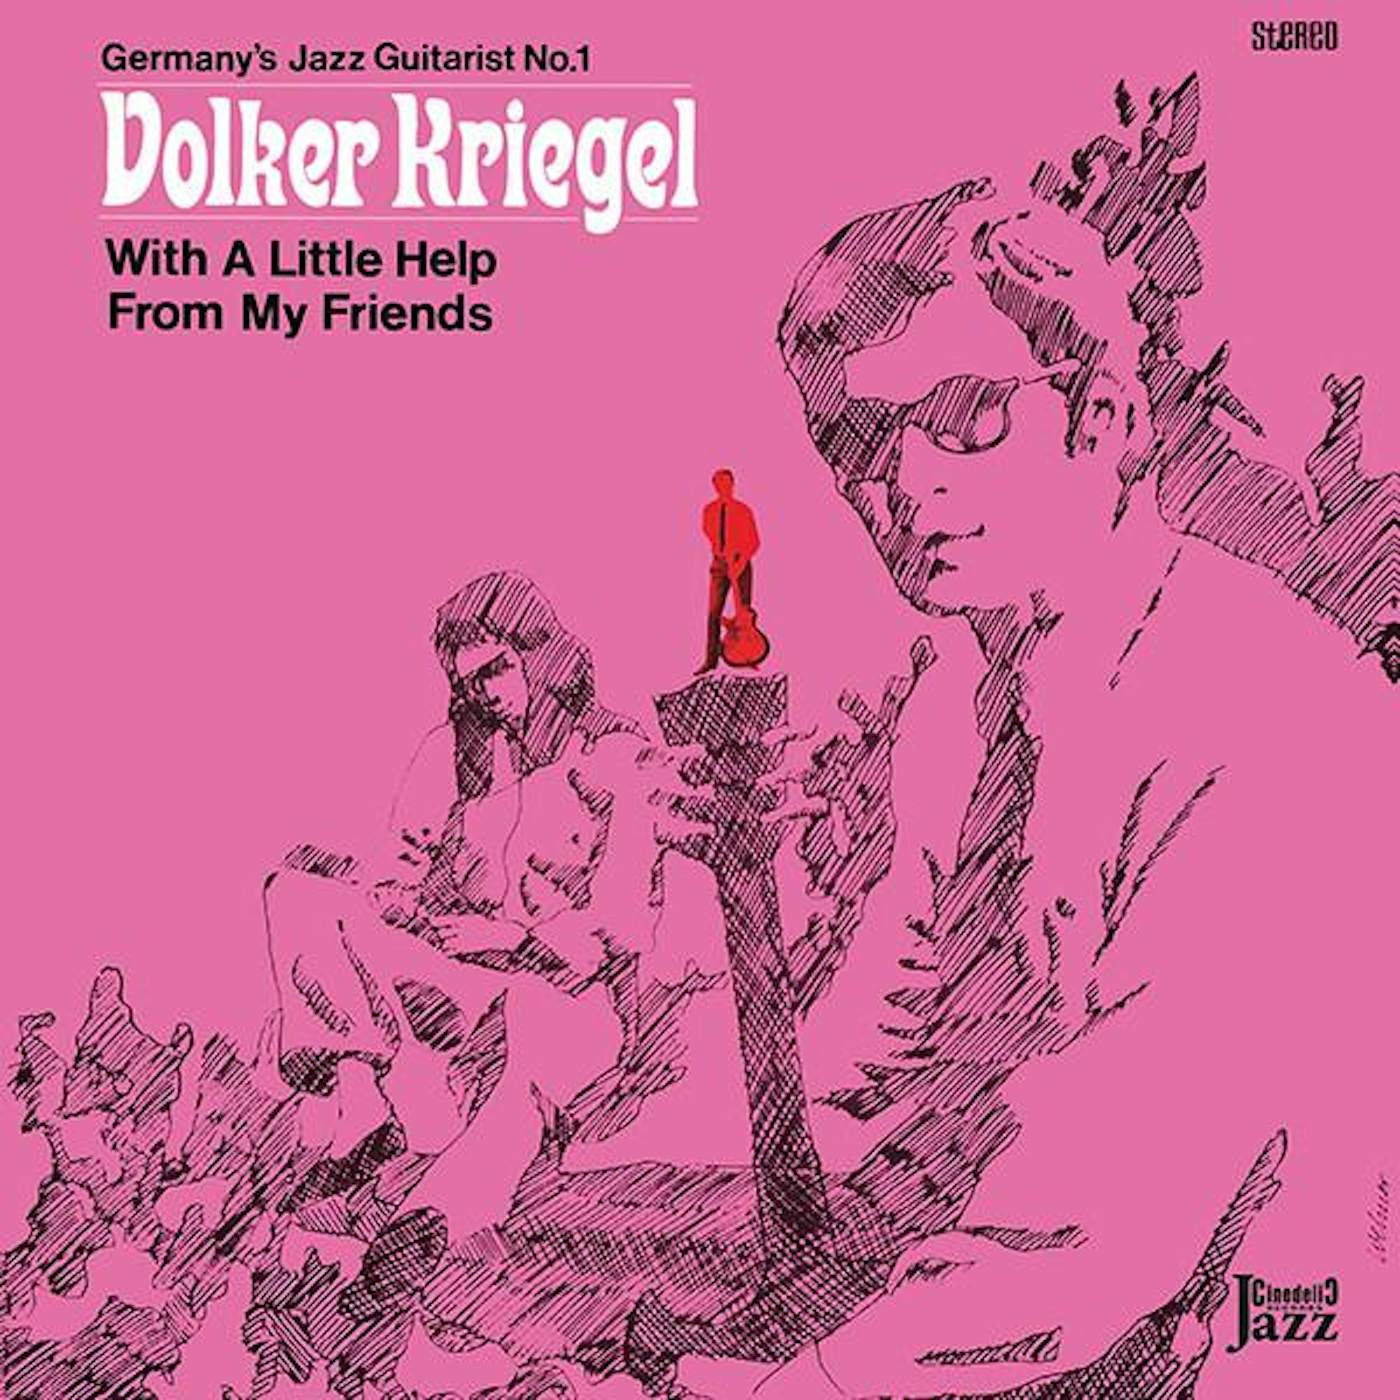 Volker Kriegel With A Little Help From My Friends Vinyl Record